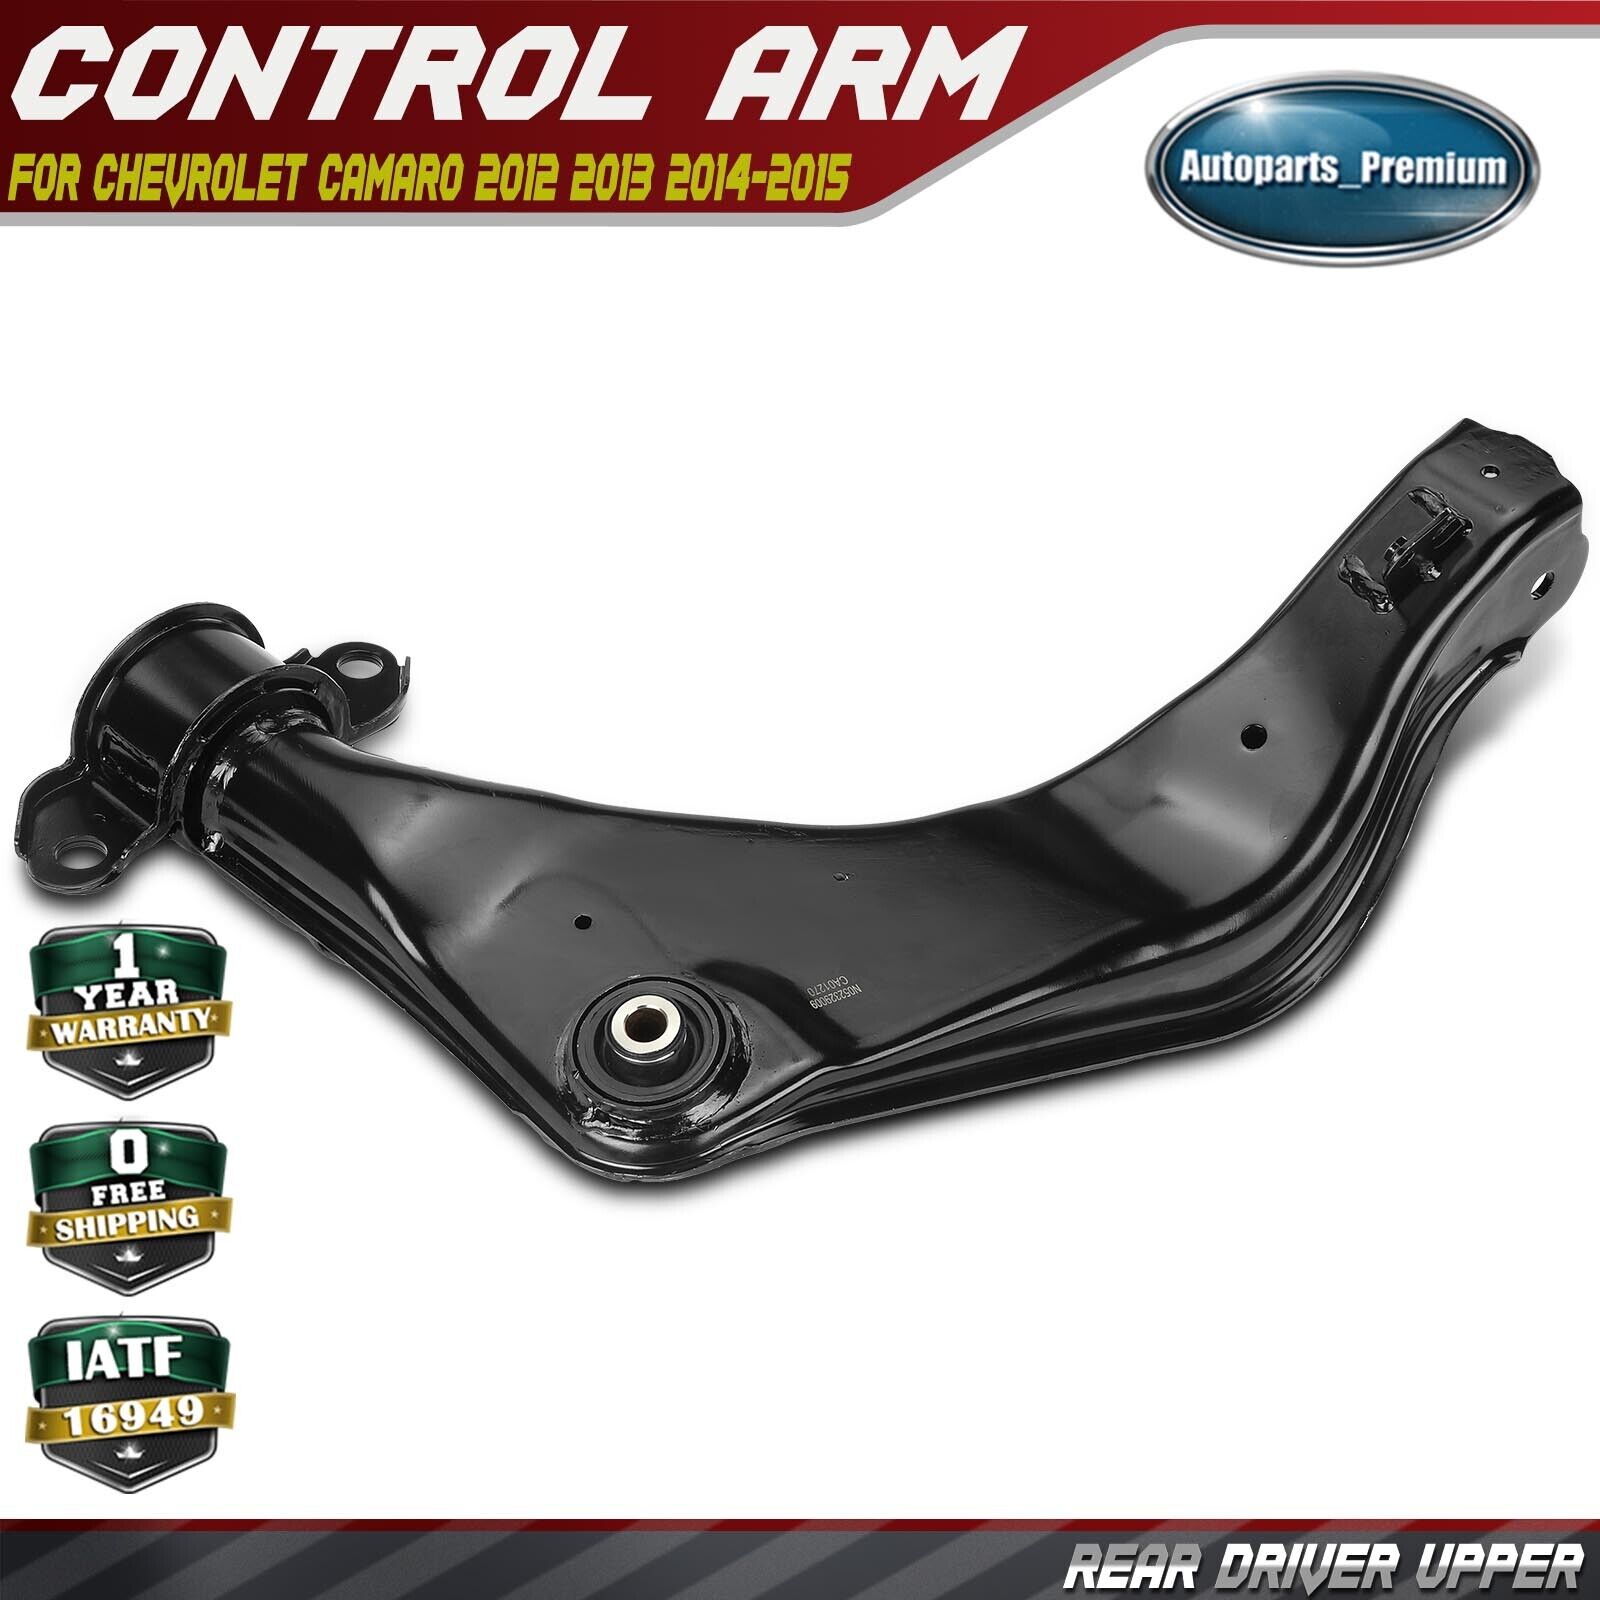 New Rear Left Driver Upper Control Arm for Chevrolet Camaro 2012 2013 2014-2015